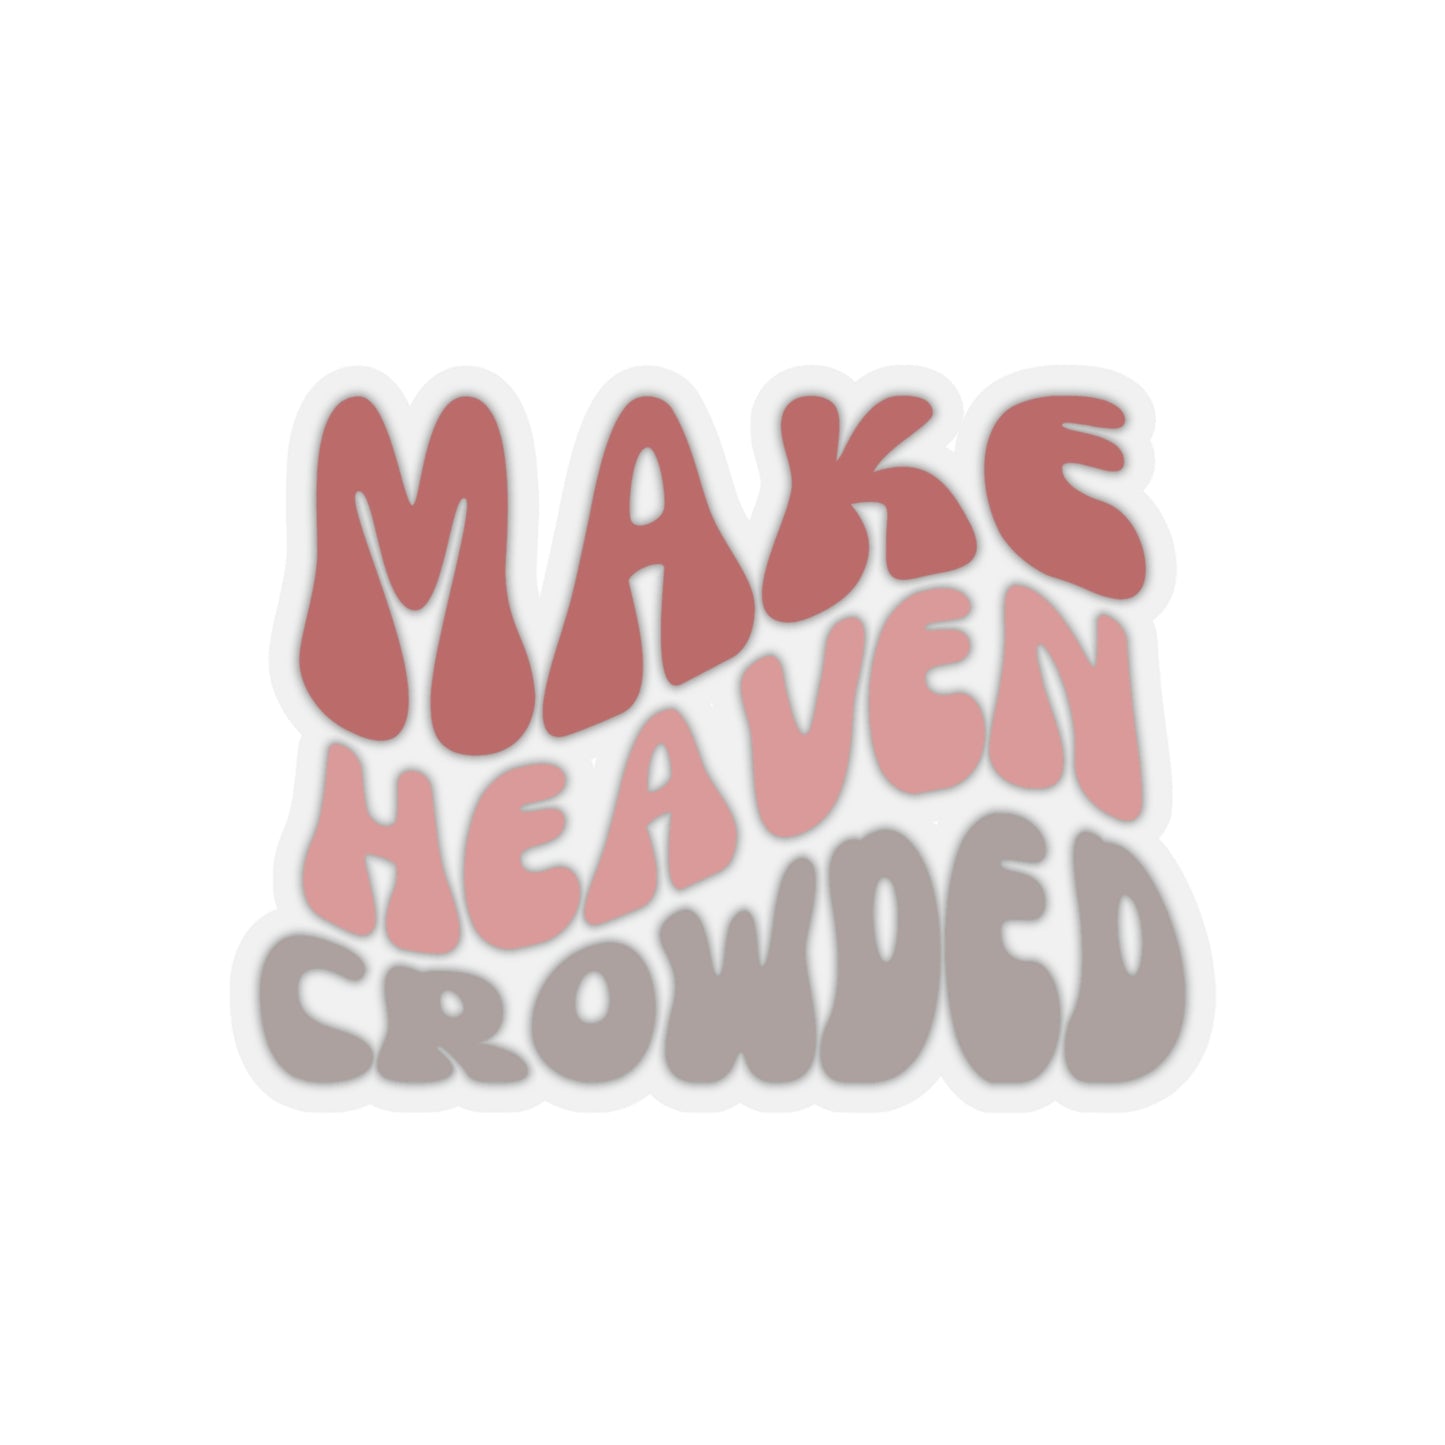 Make Heaven Crowded, Kiss-Cut Stickers